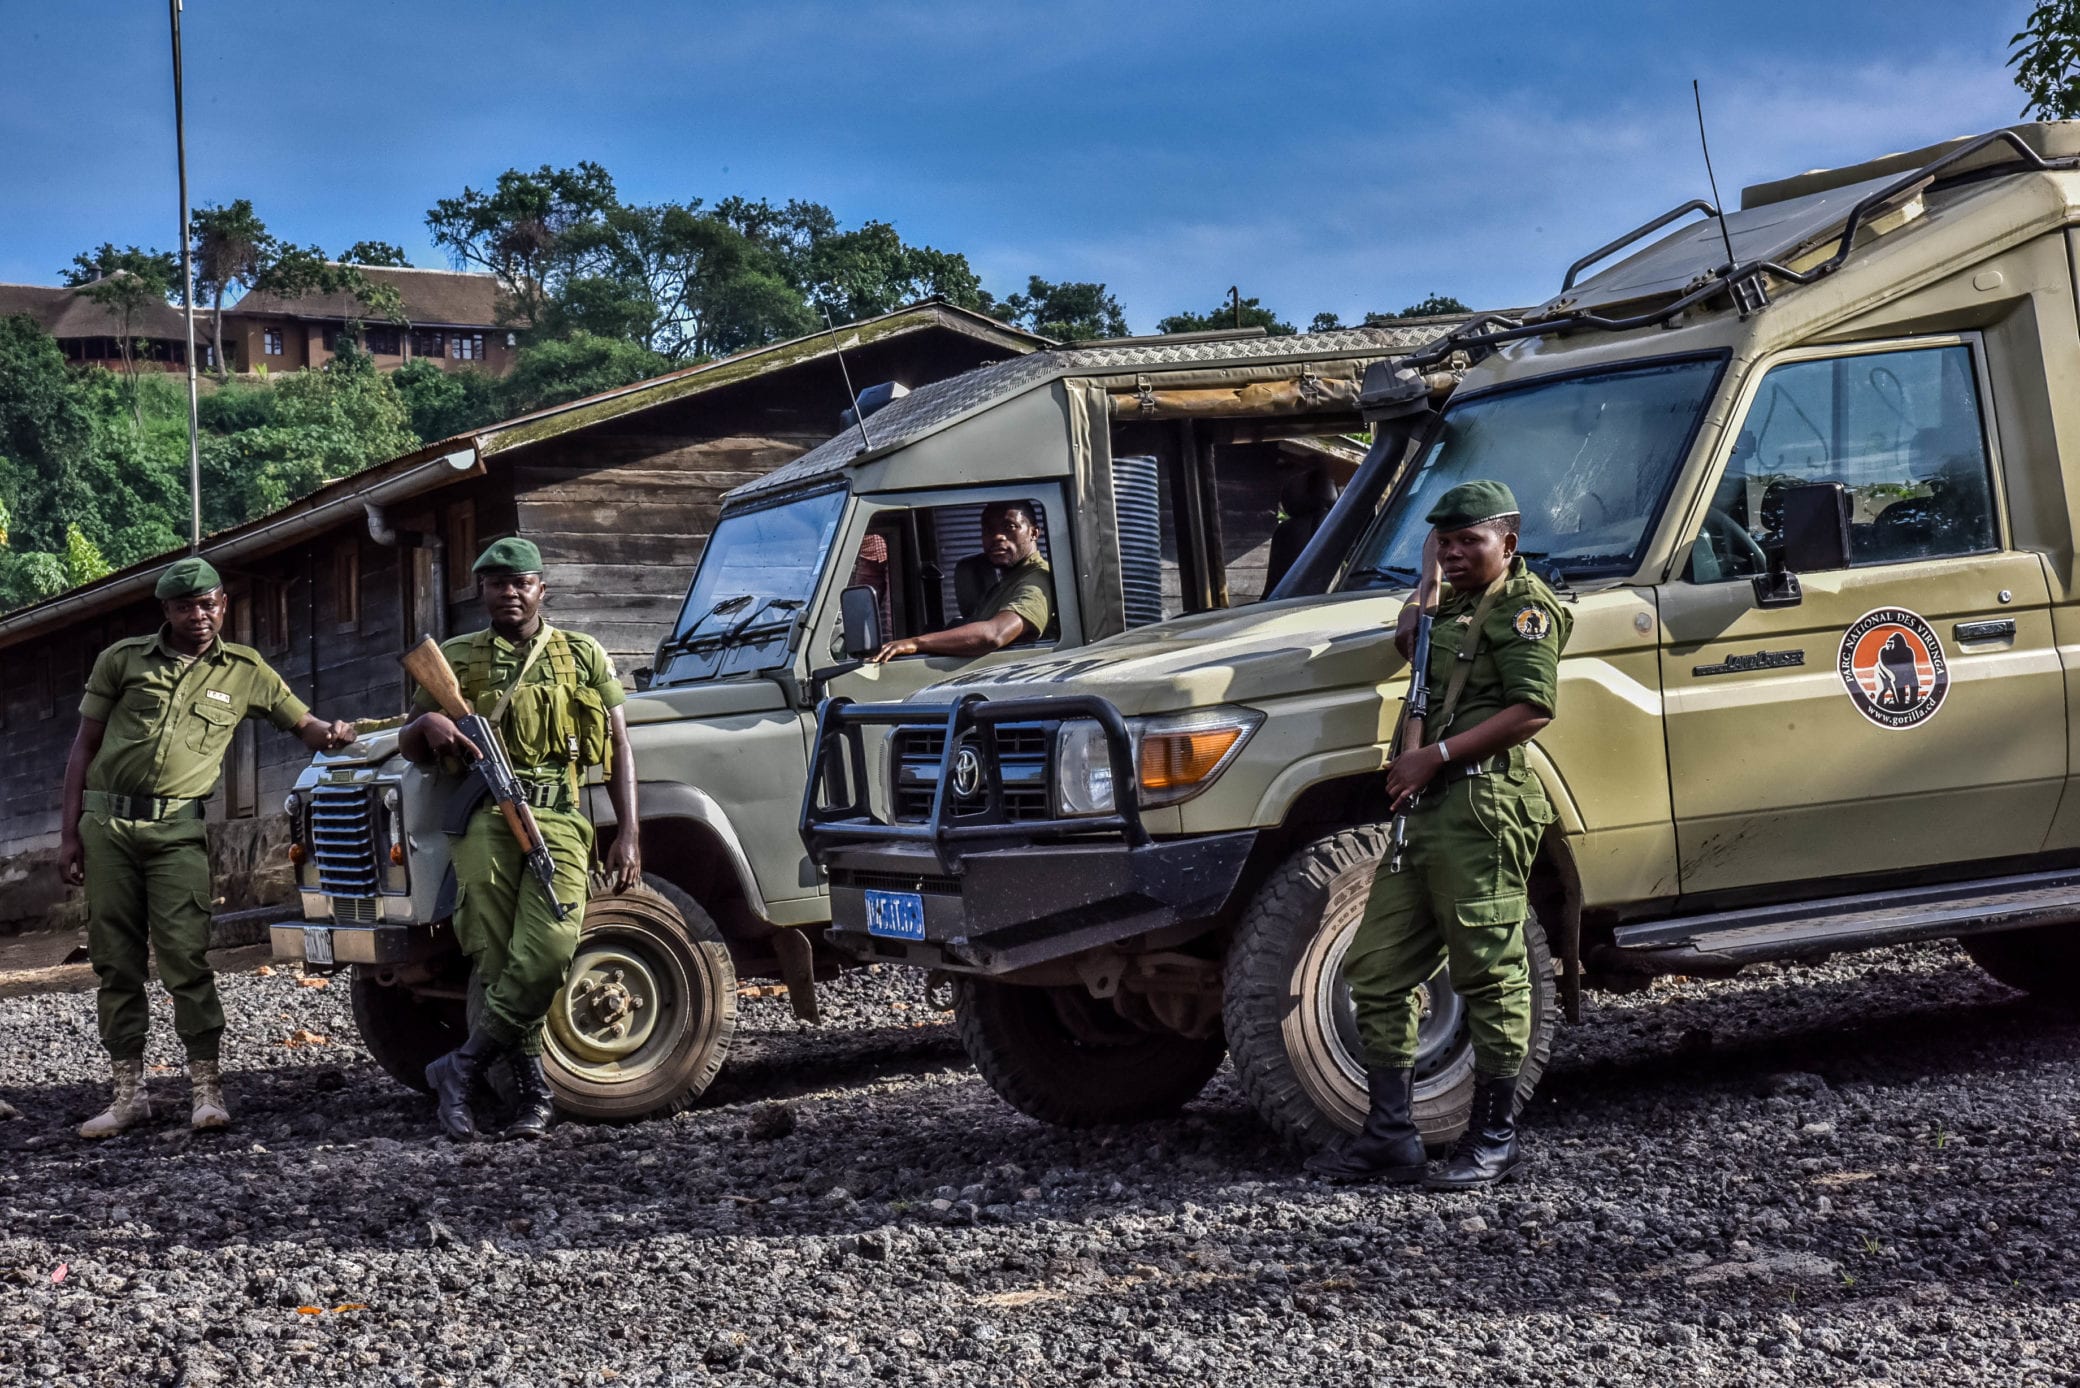 Rangers and their vehicles at Kibumba Camp